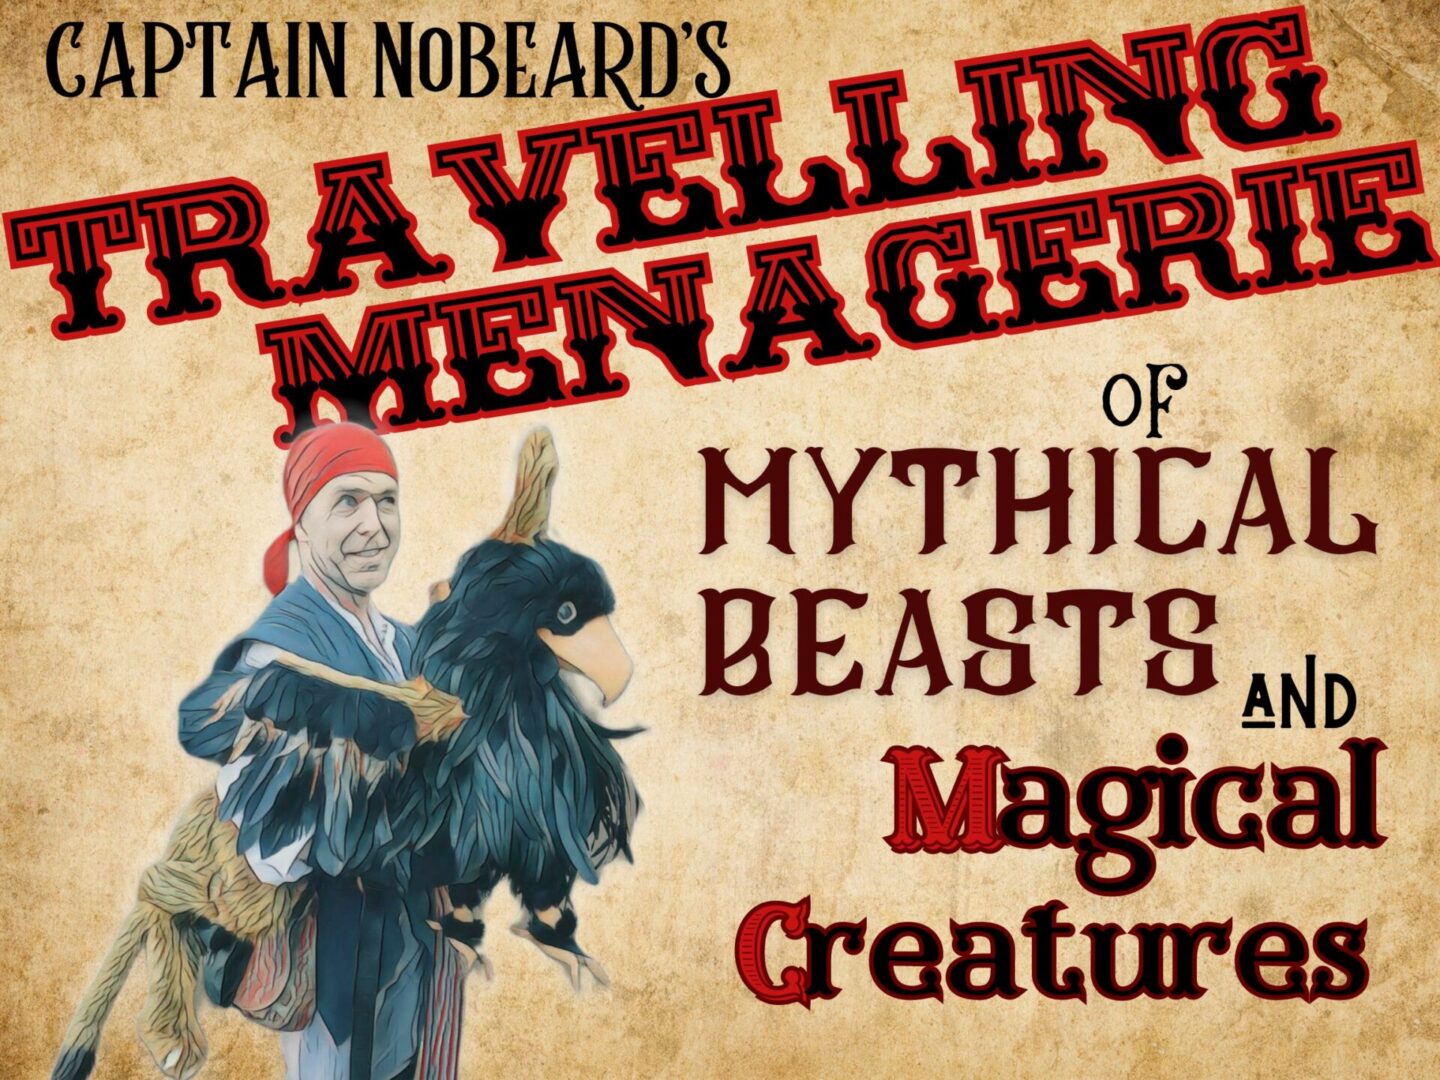 Captain Nobeards Travelling Menagerie promotional image